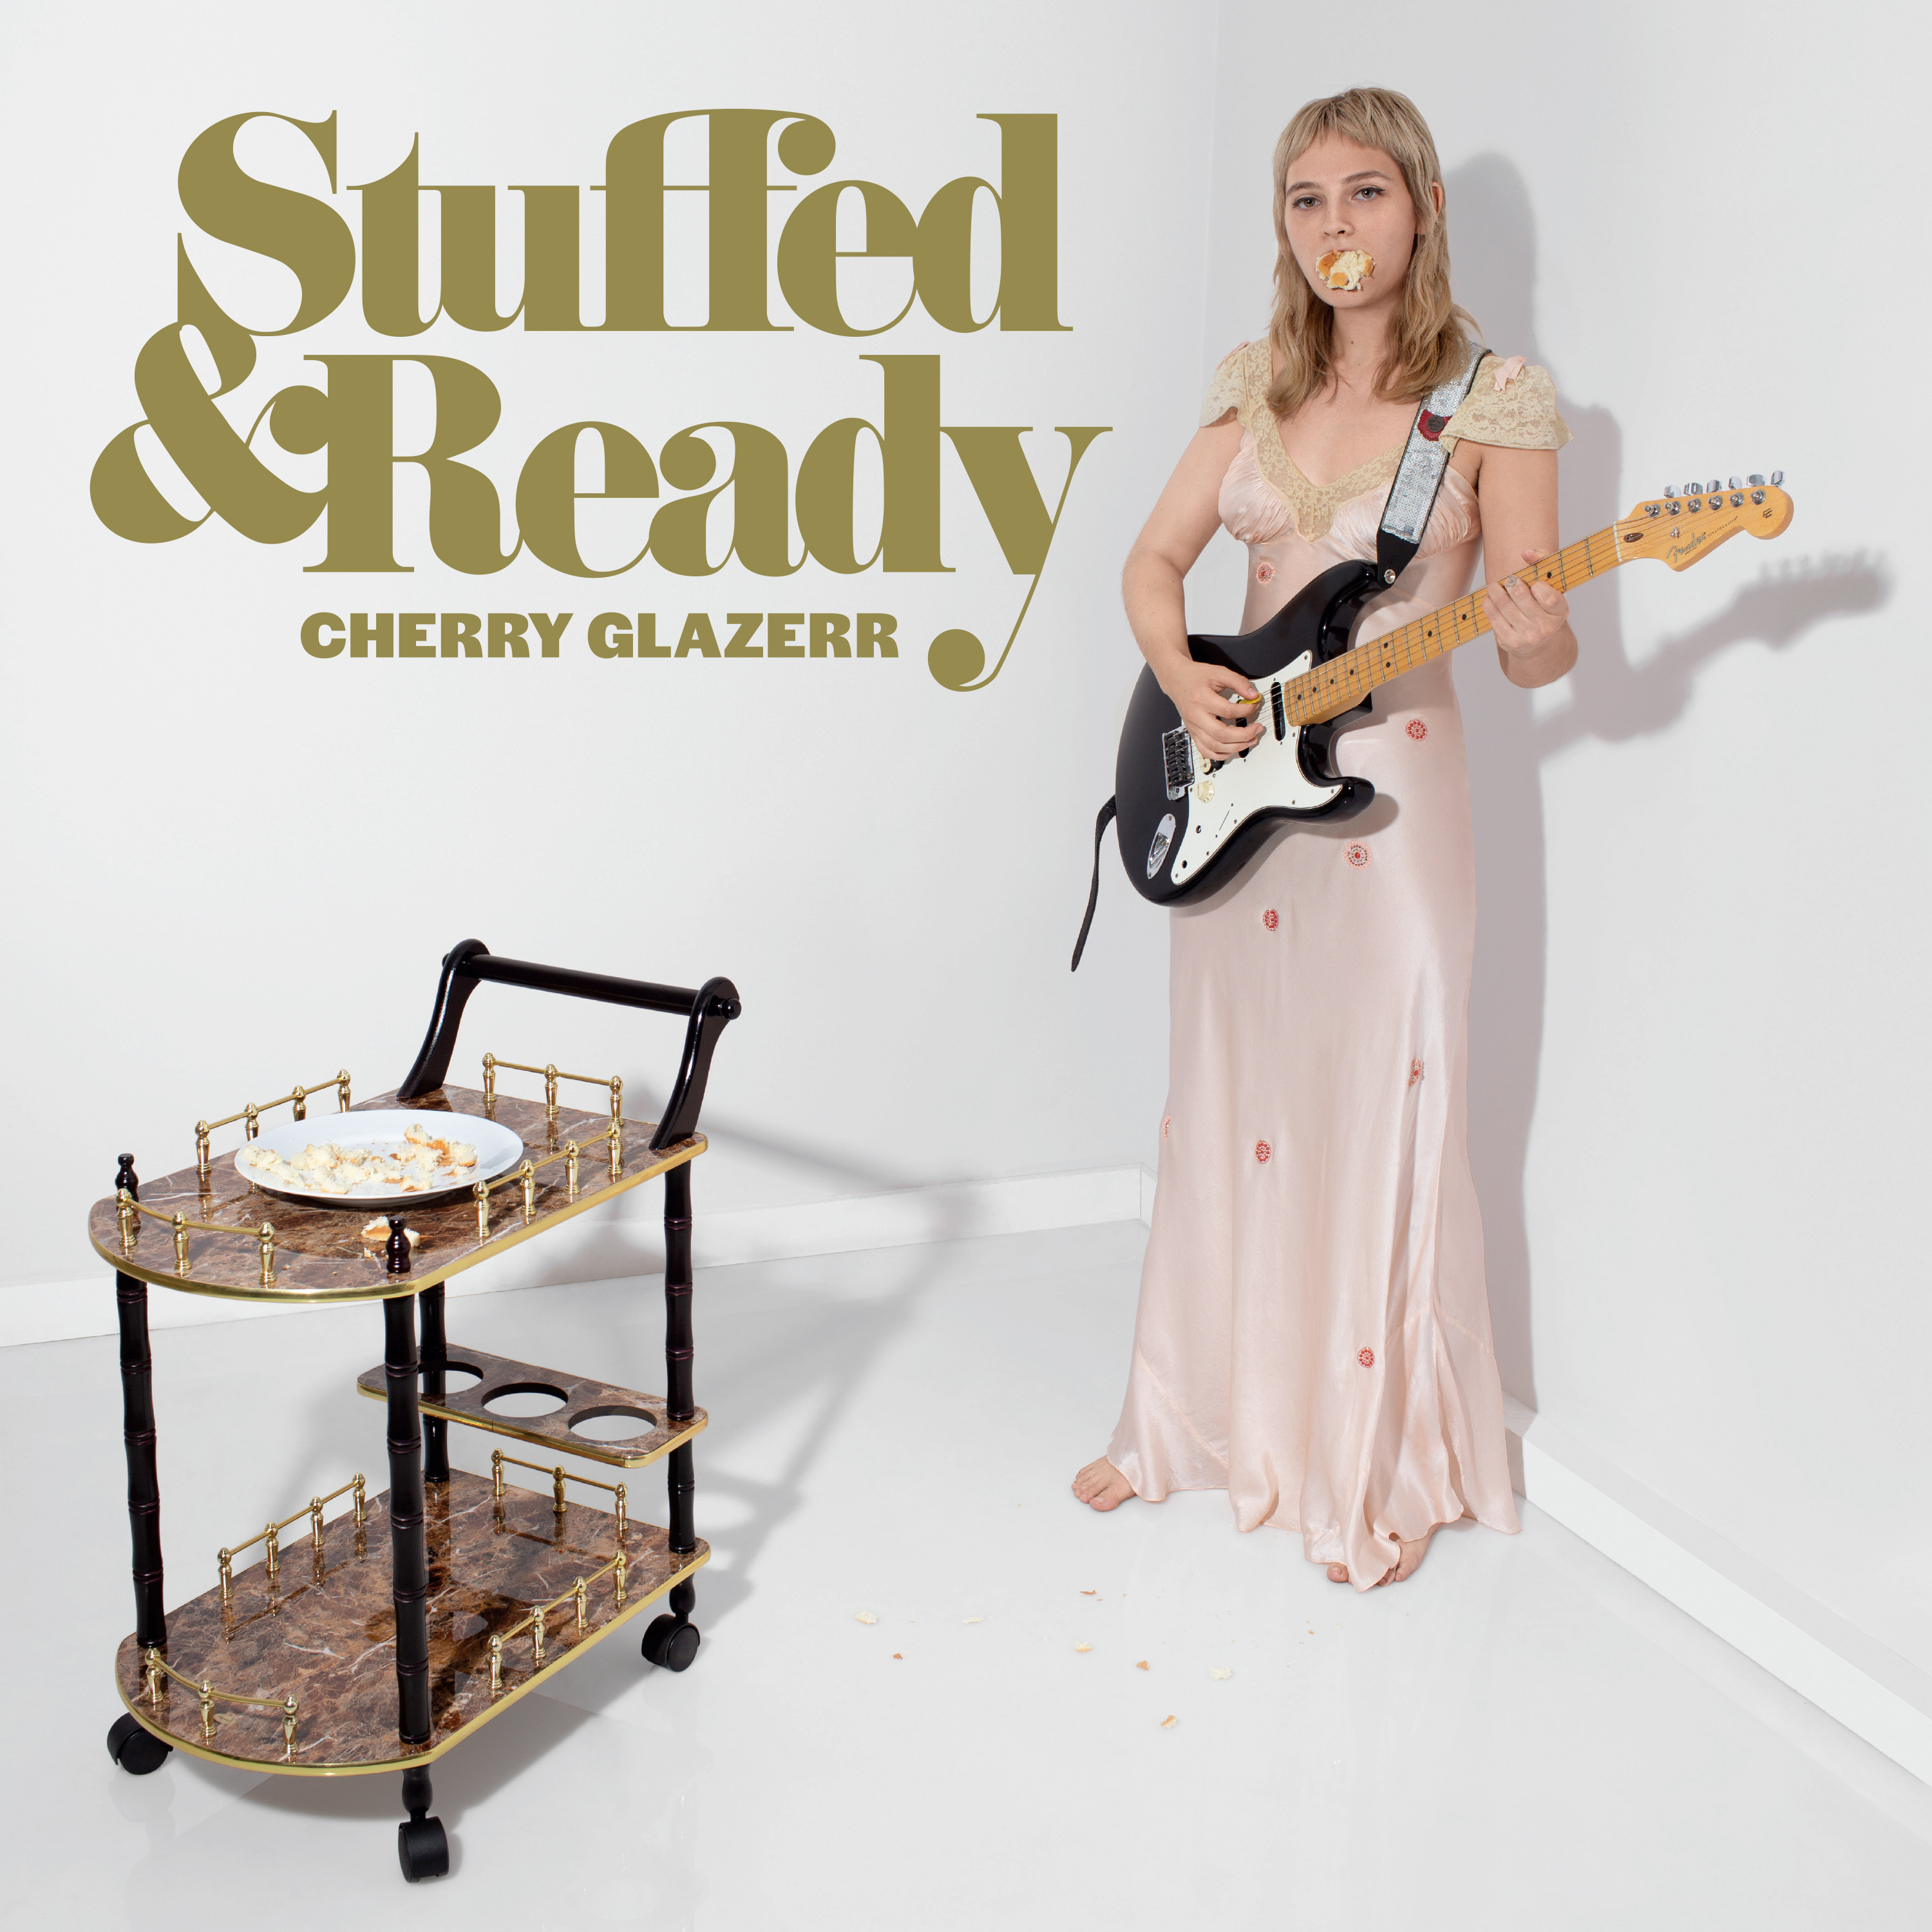 Cherry Glazerr - Stuffed & Ready (red opaque vinyl)